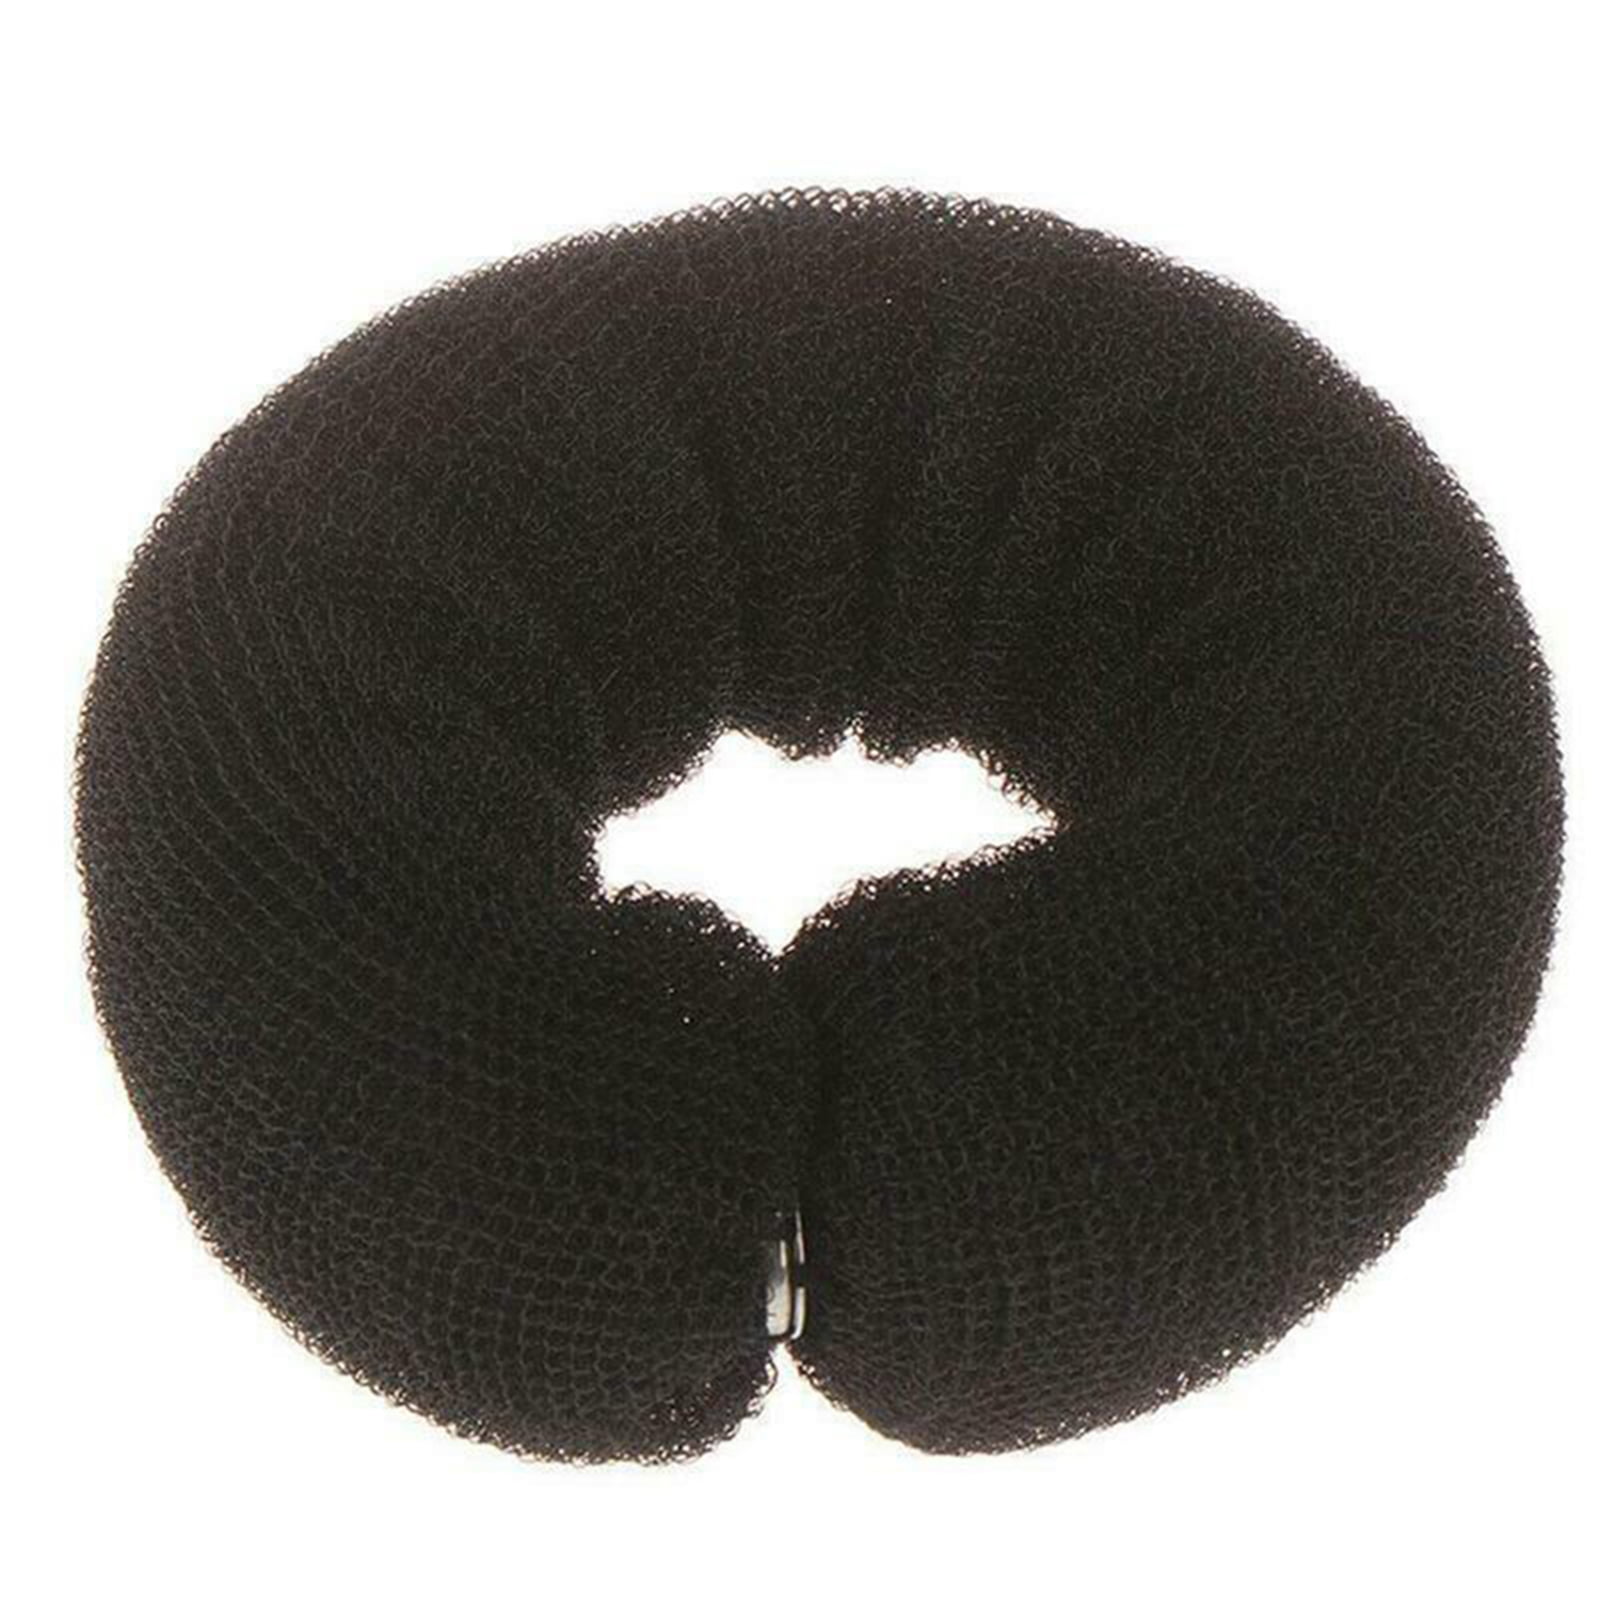 Sponget Foam Heart Donut Shaped Hair Updo Maker Bun Wraps Hair Ring Clip Tool